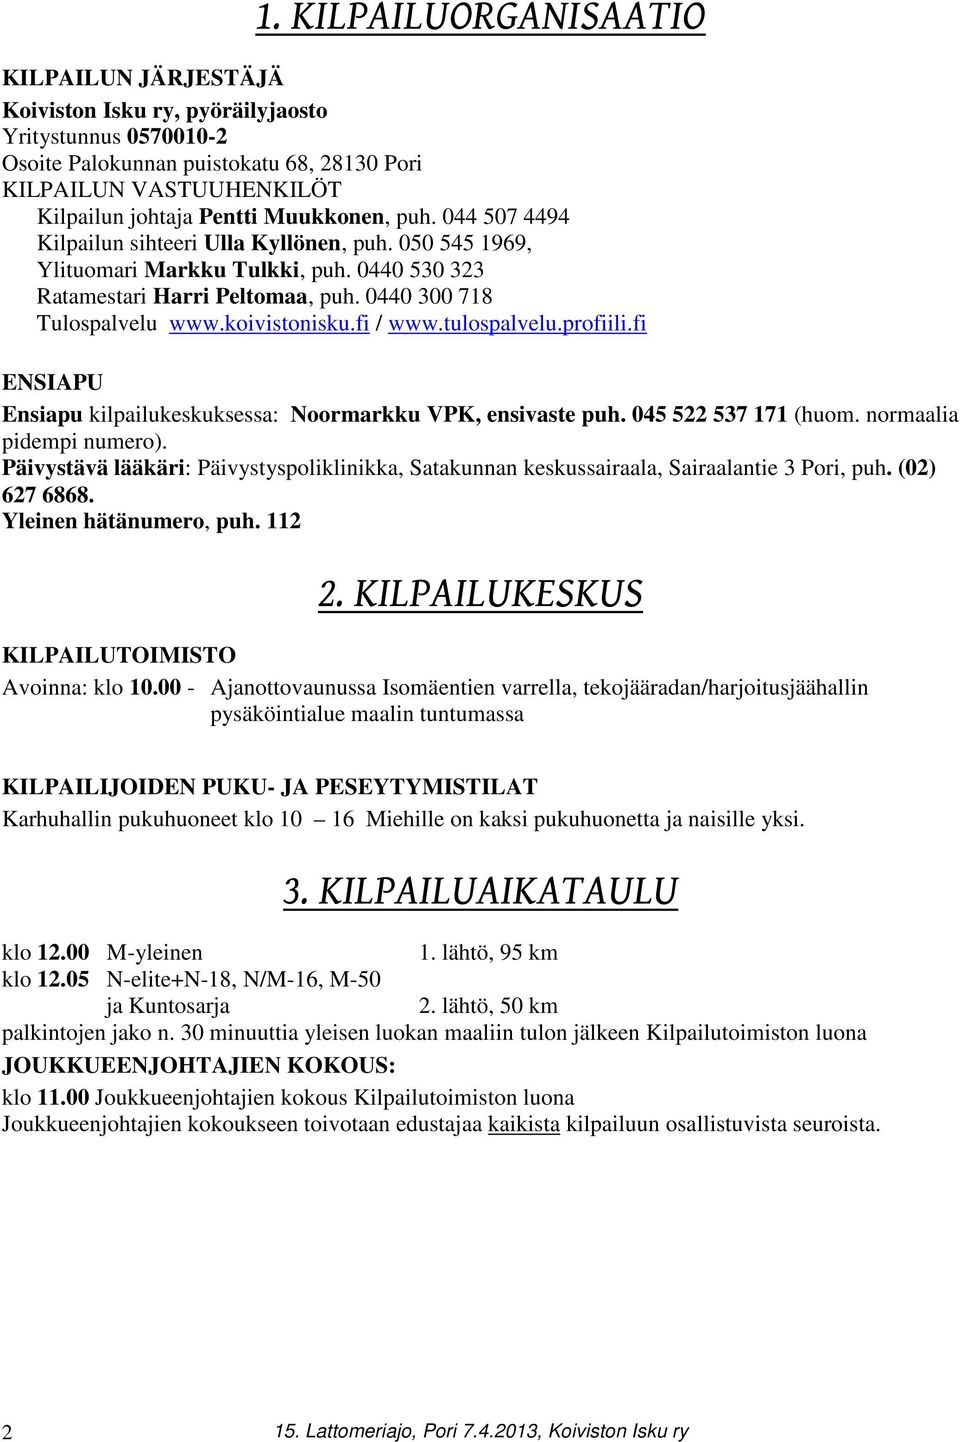 koivistonisku.fi / www.tulospalvelu.profiili.fi ENSIAPU Ensiapu kilpailukeskuksessa: Noormarkku VPK, ensivaste puh. 045 522 537 171 (huom. normaalia pidempi numero).